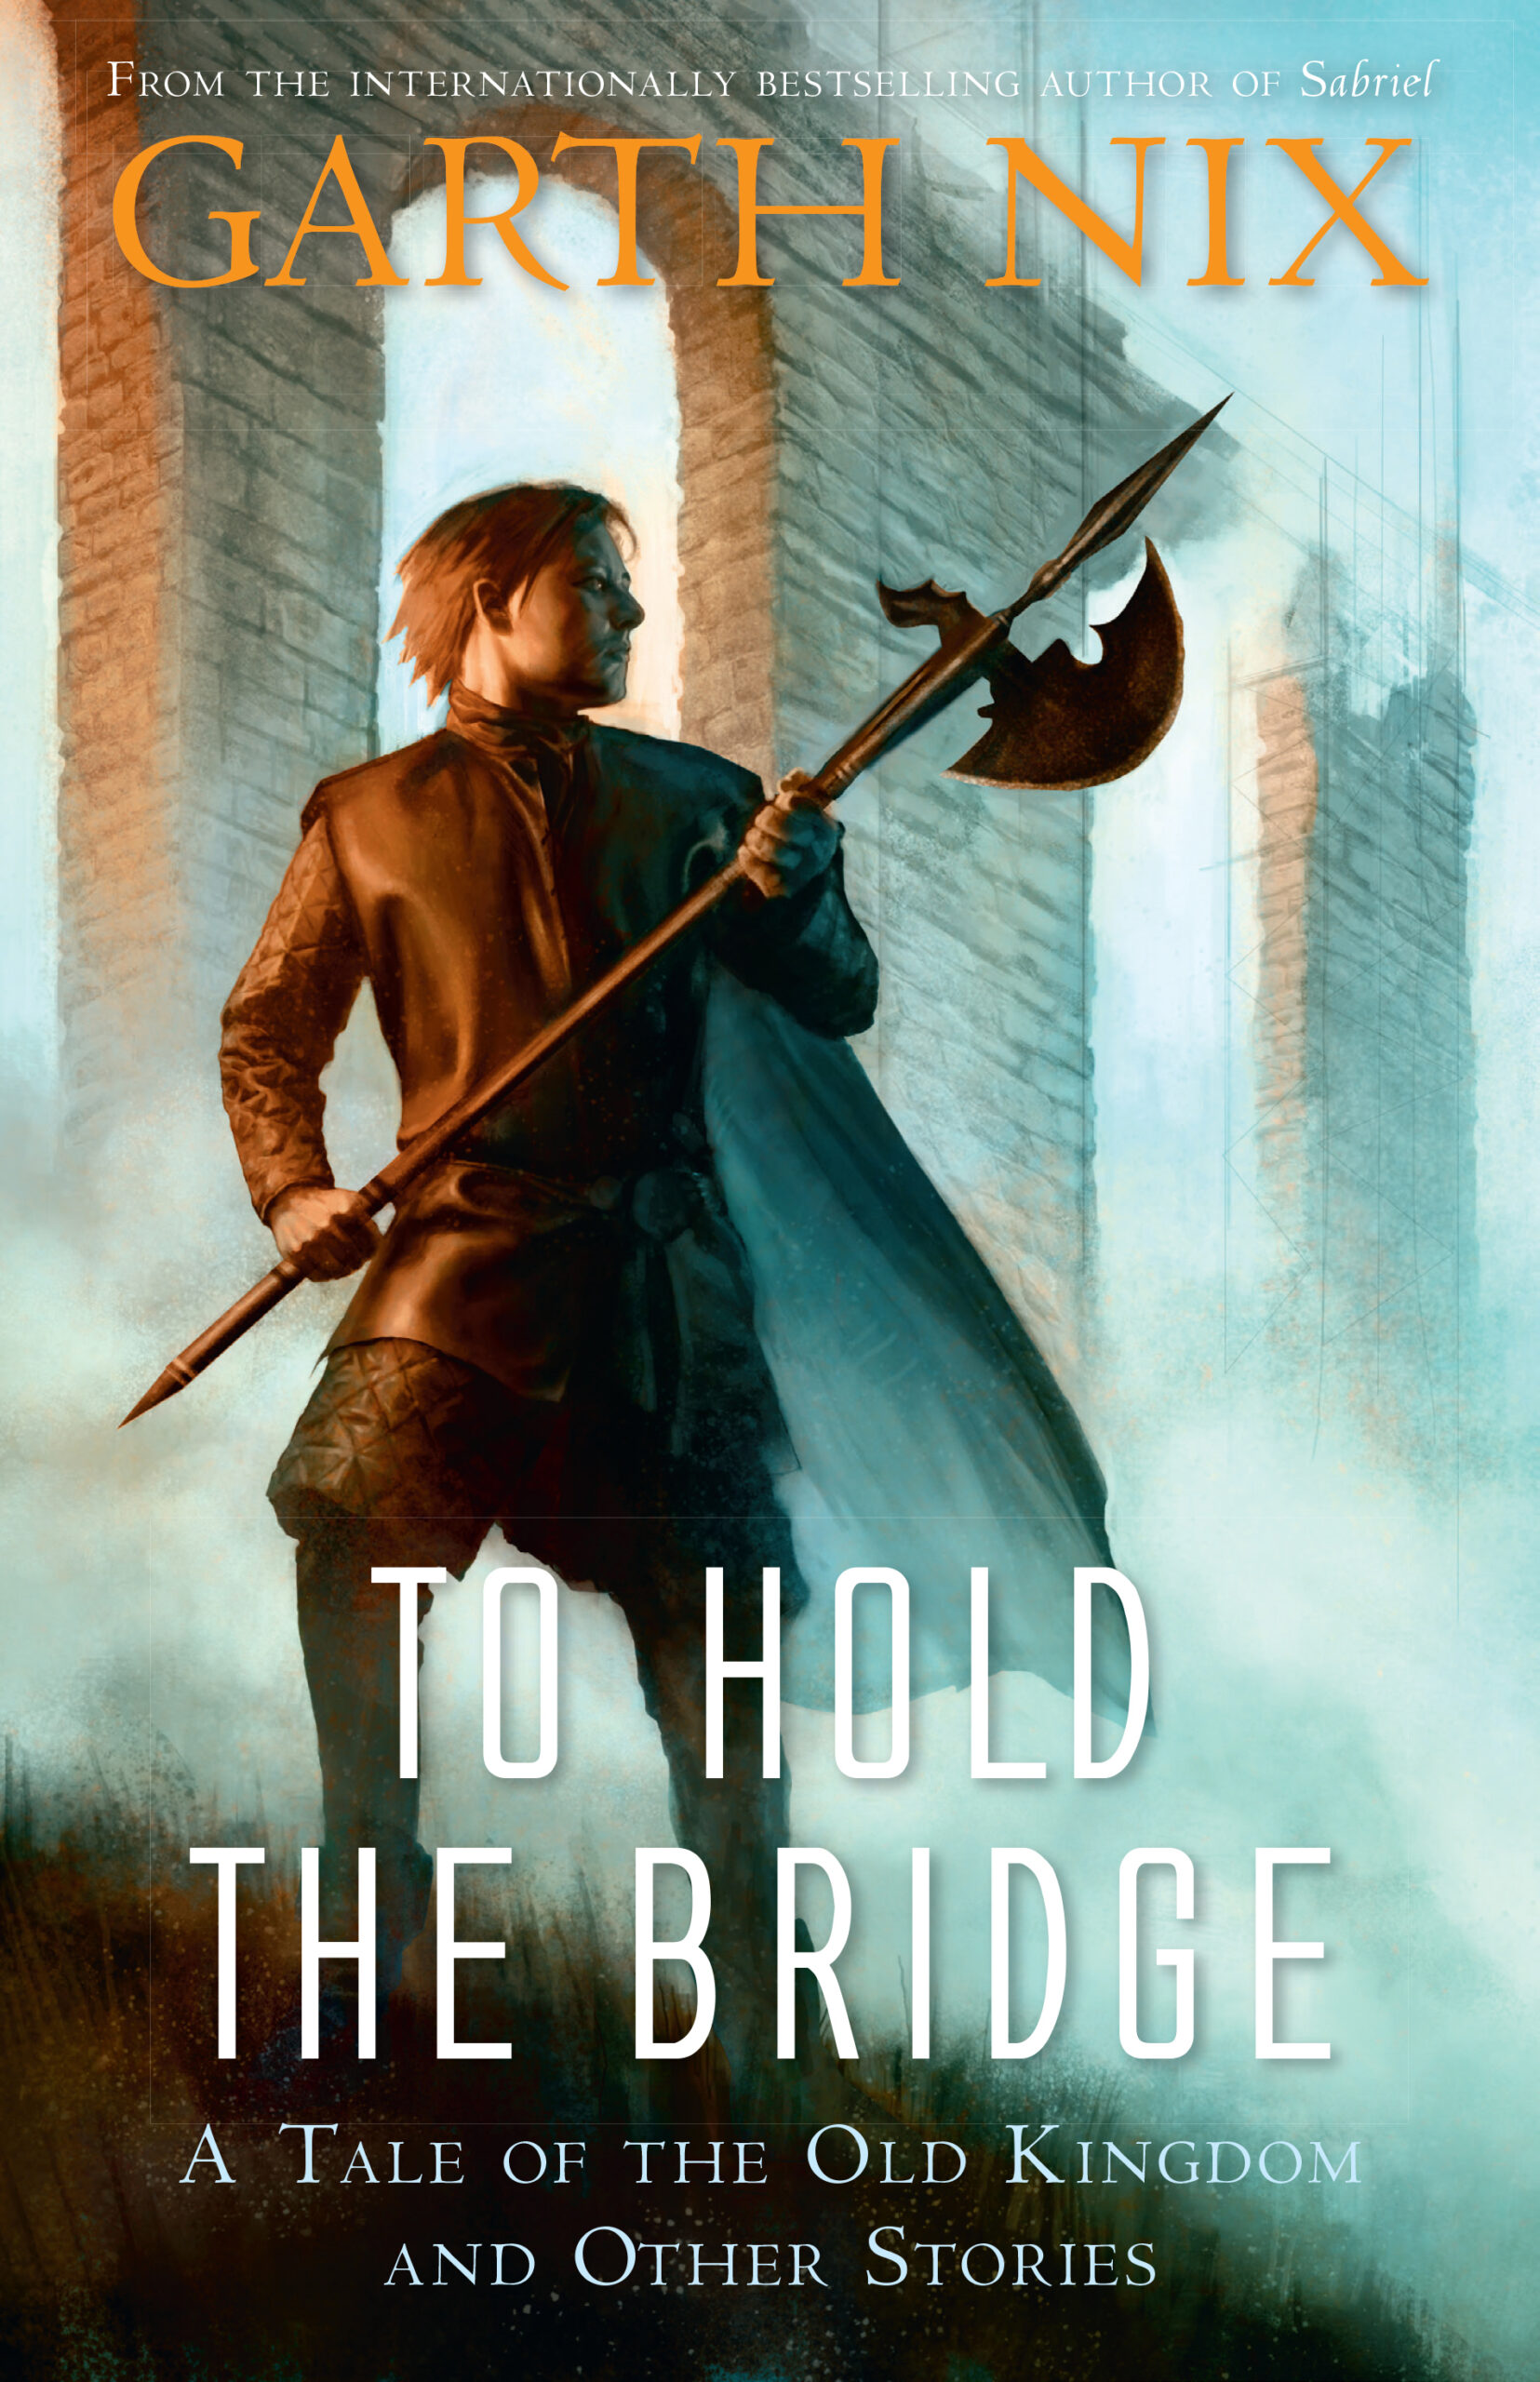 the bridge kingdom book 3